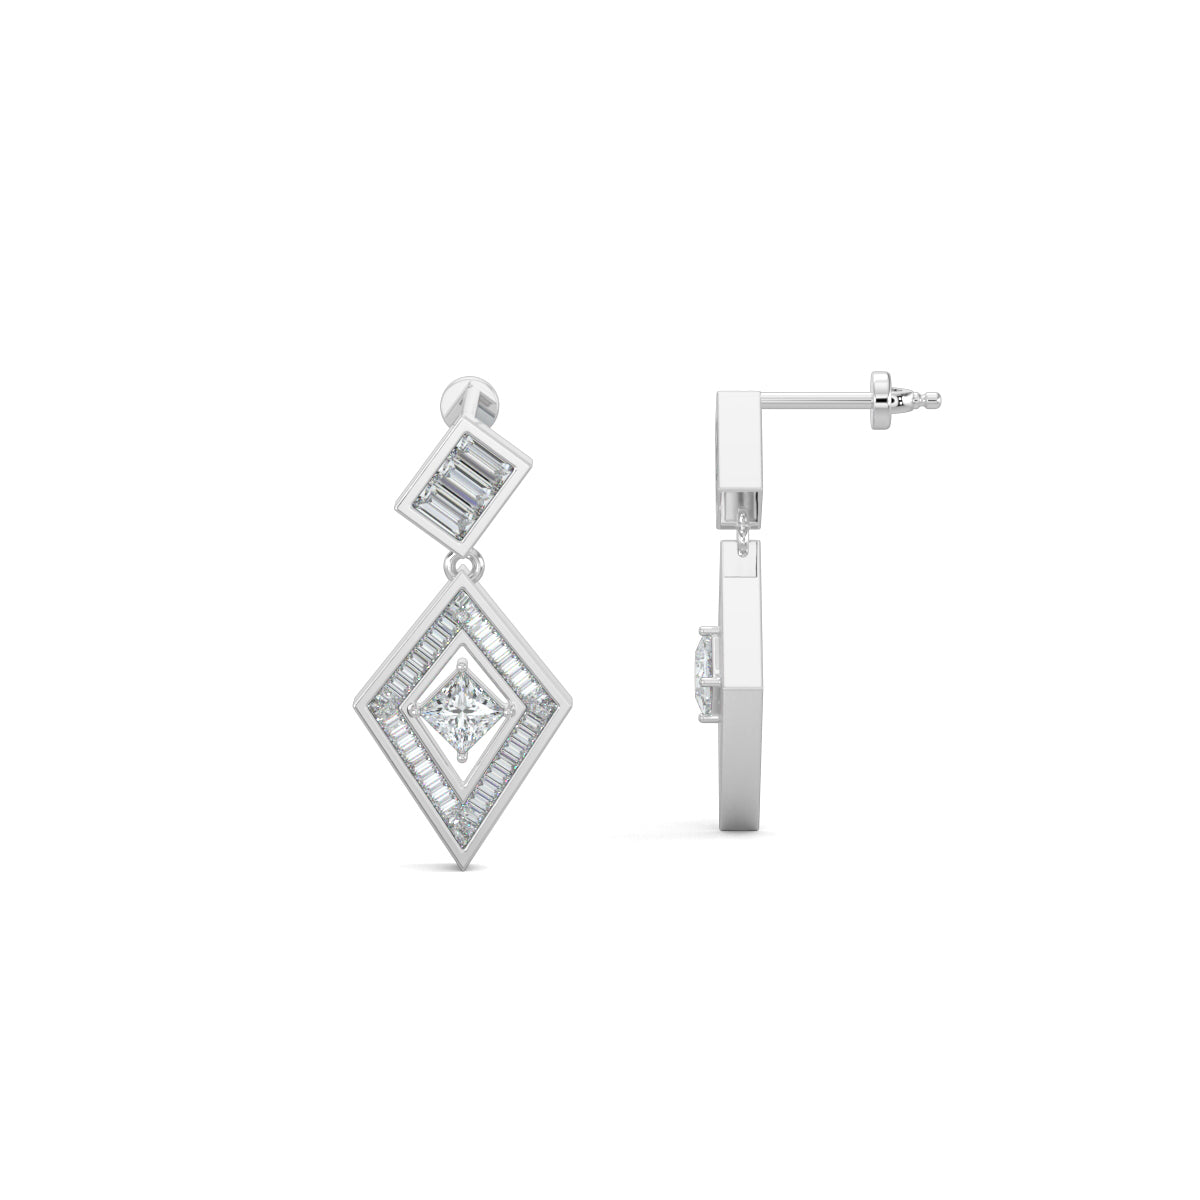 White Gold, Diamond Earrings, Natural diamond earrings, Lab-grown diamond earrings, PrismKite Earrings, Mid-length diamond earrings, Baguette-cut diamonds, Princess-cut diamond, Kite-shaped earrings, Modern diamond jewelry, Contemporary earrings, Luxury diamond earrings.